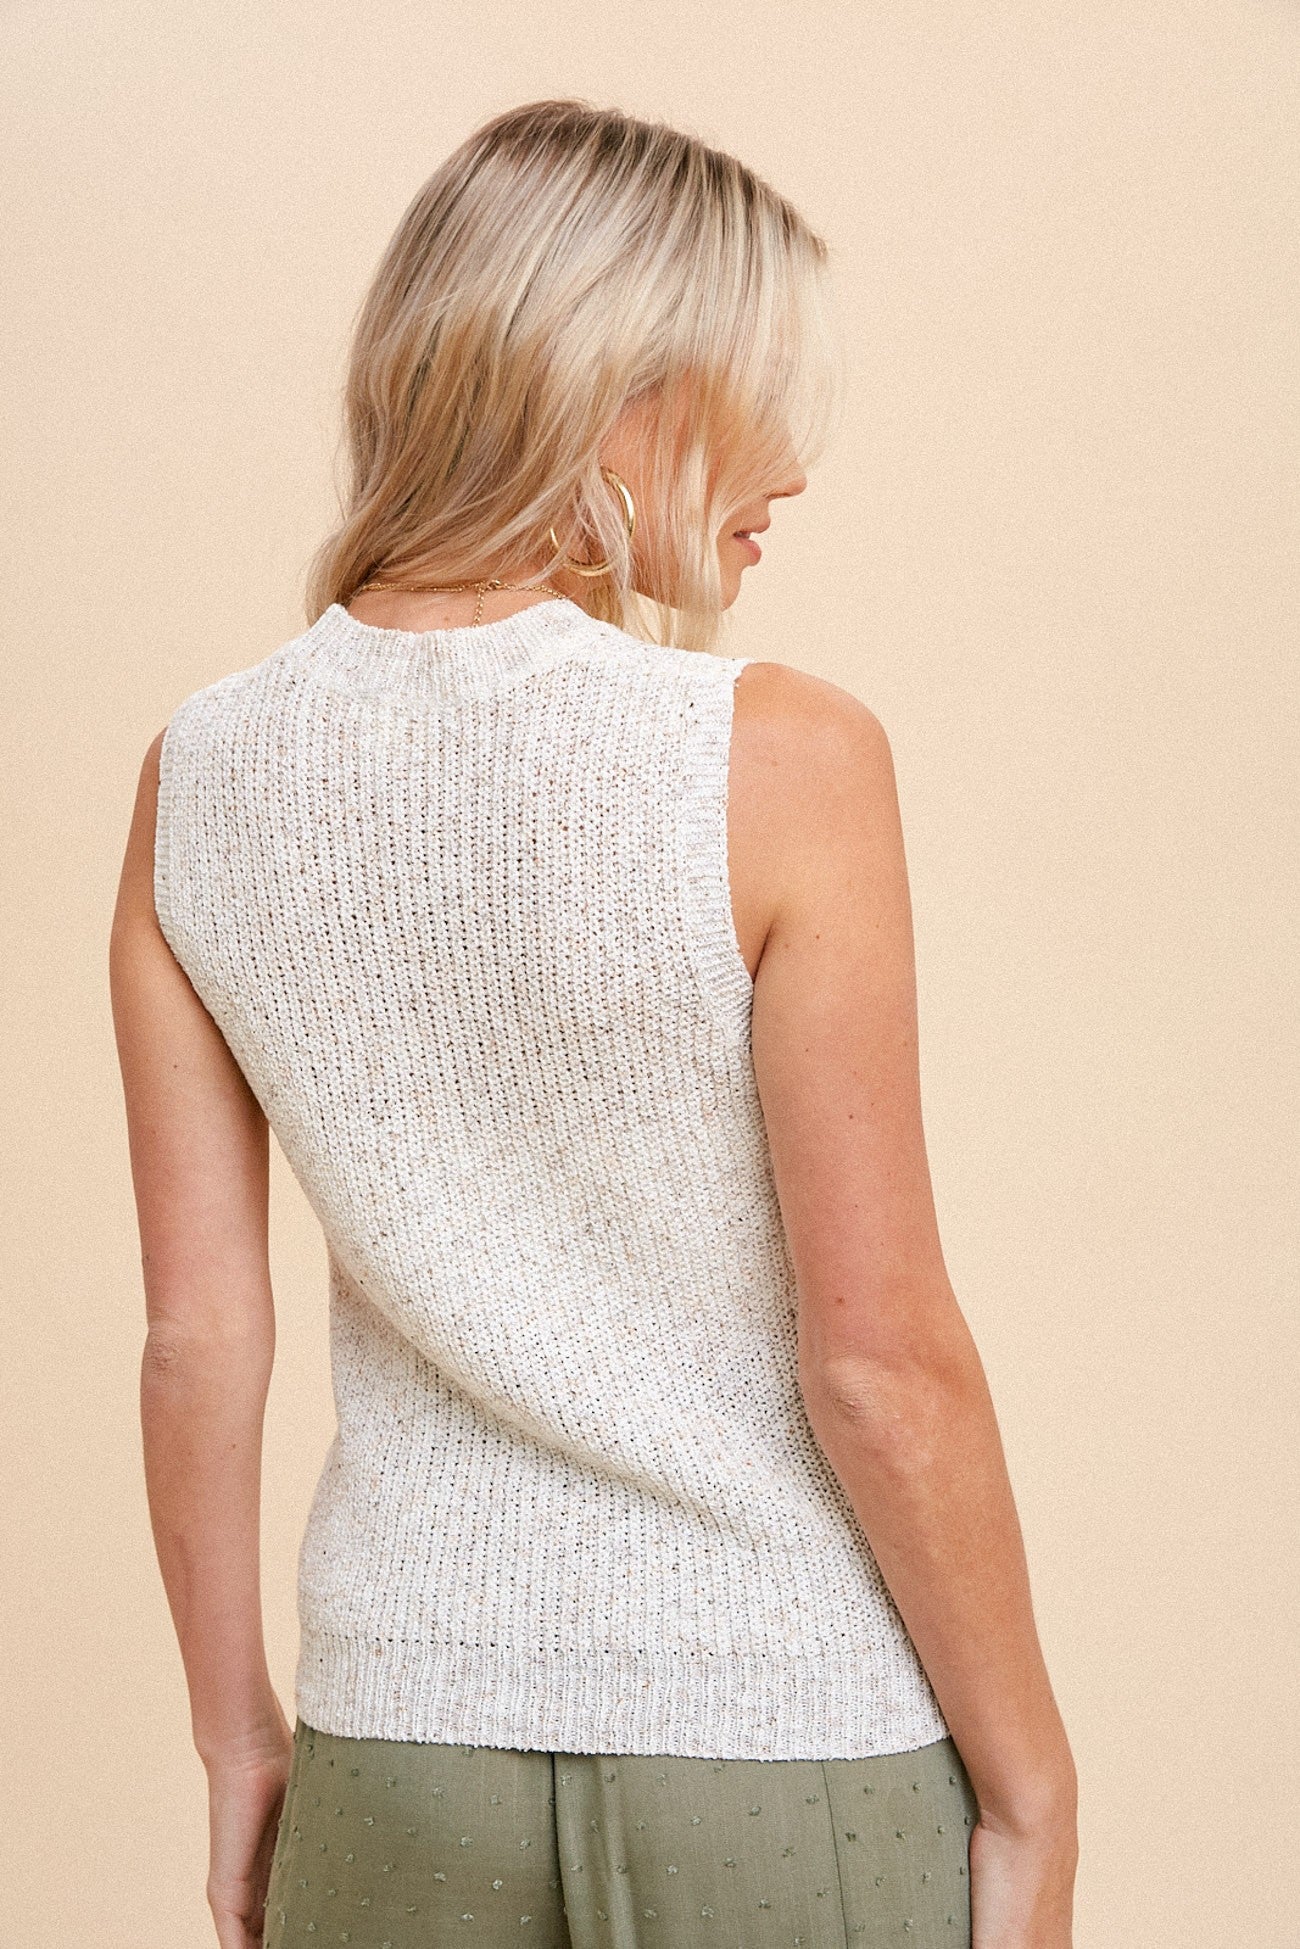 The Melissa Knit Sweater Vest